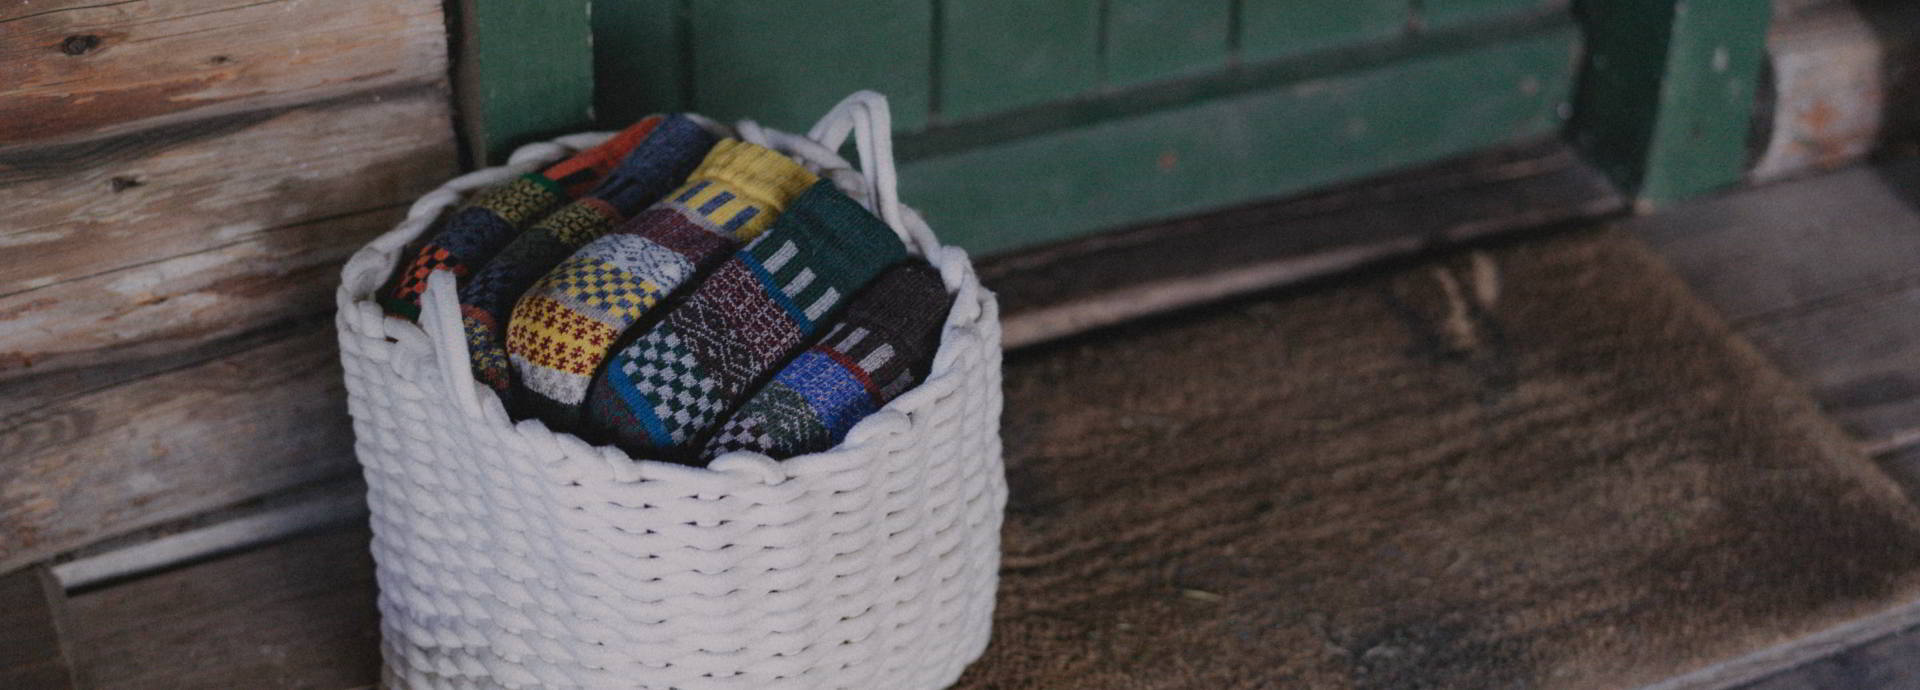 how to care for merino wool socks